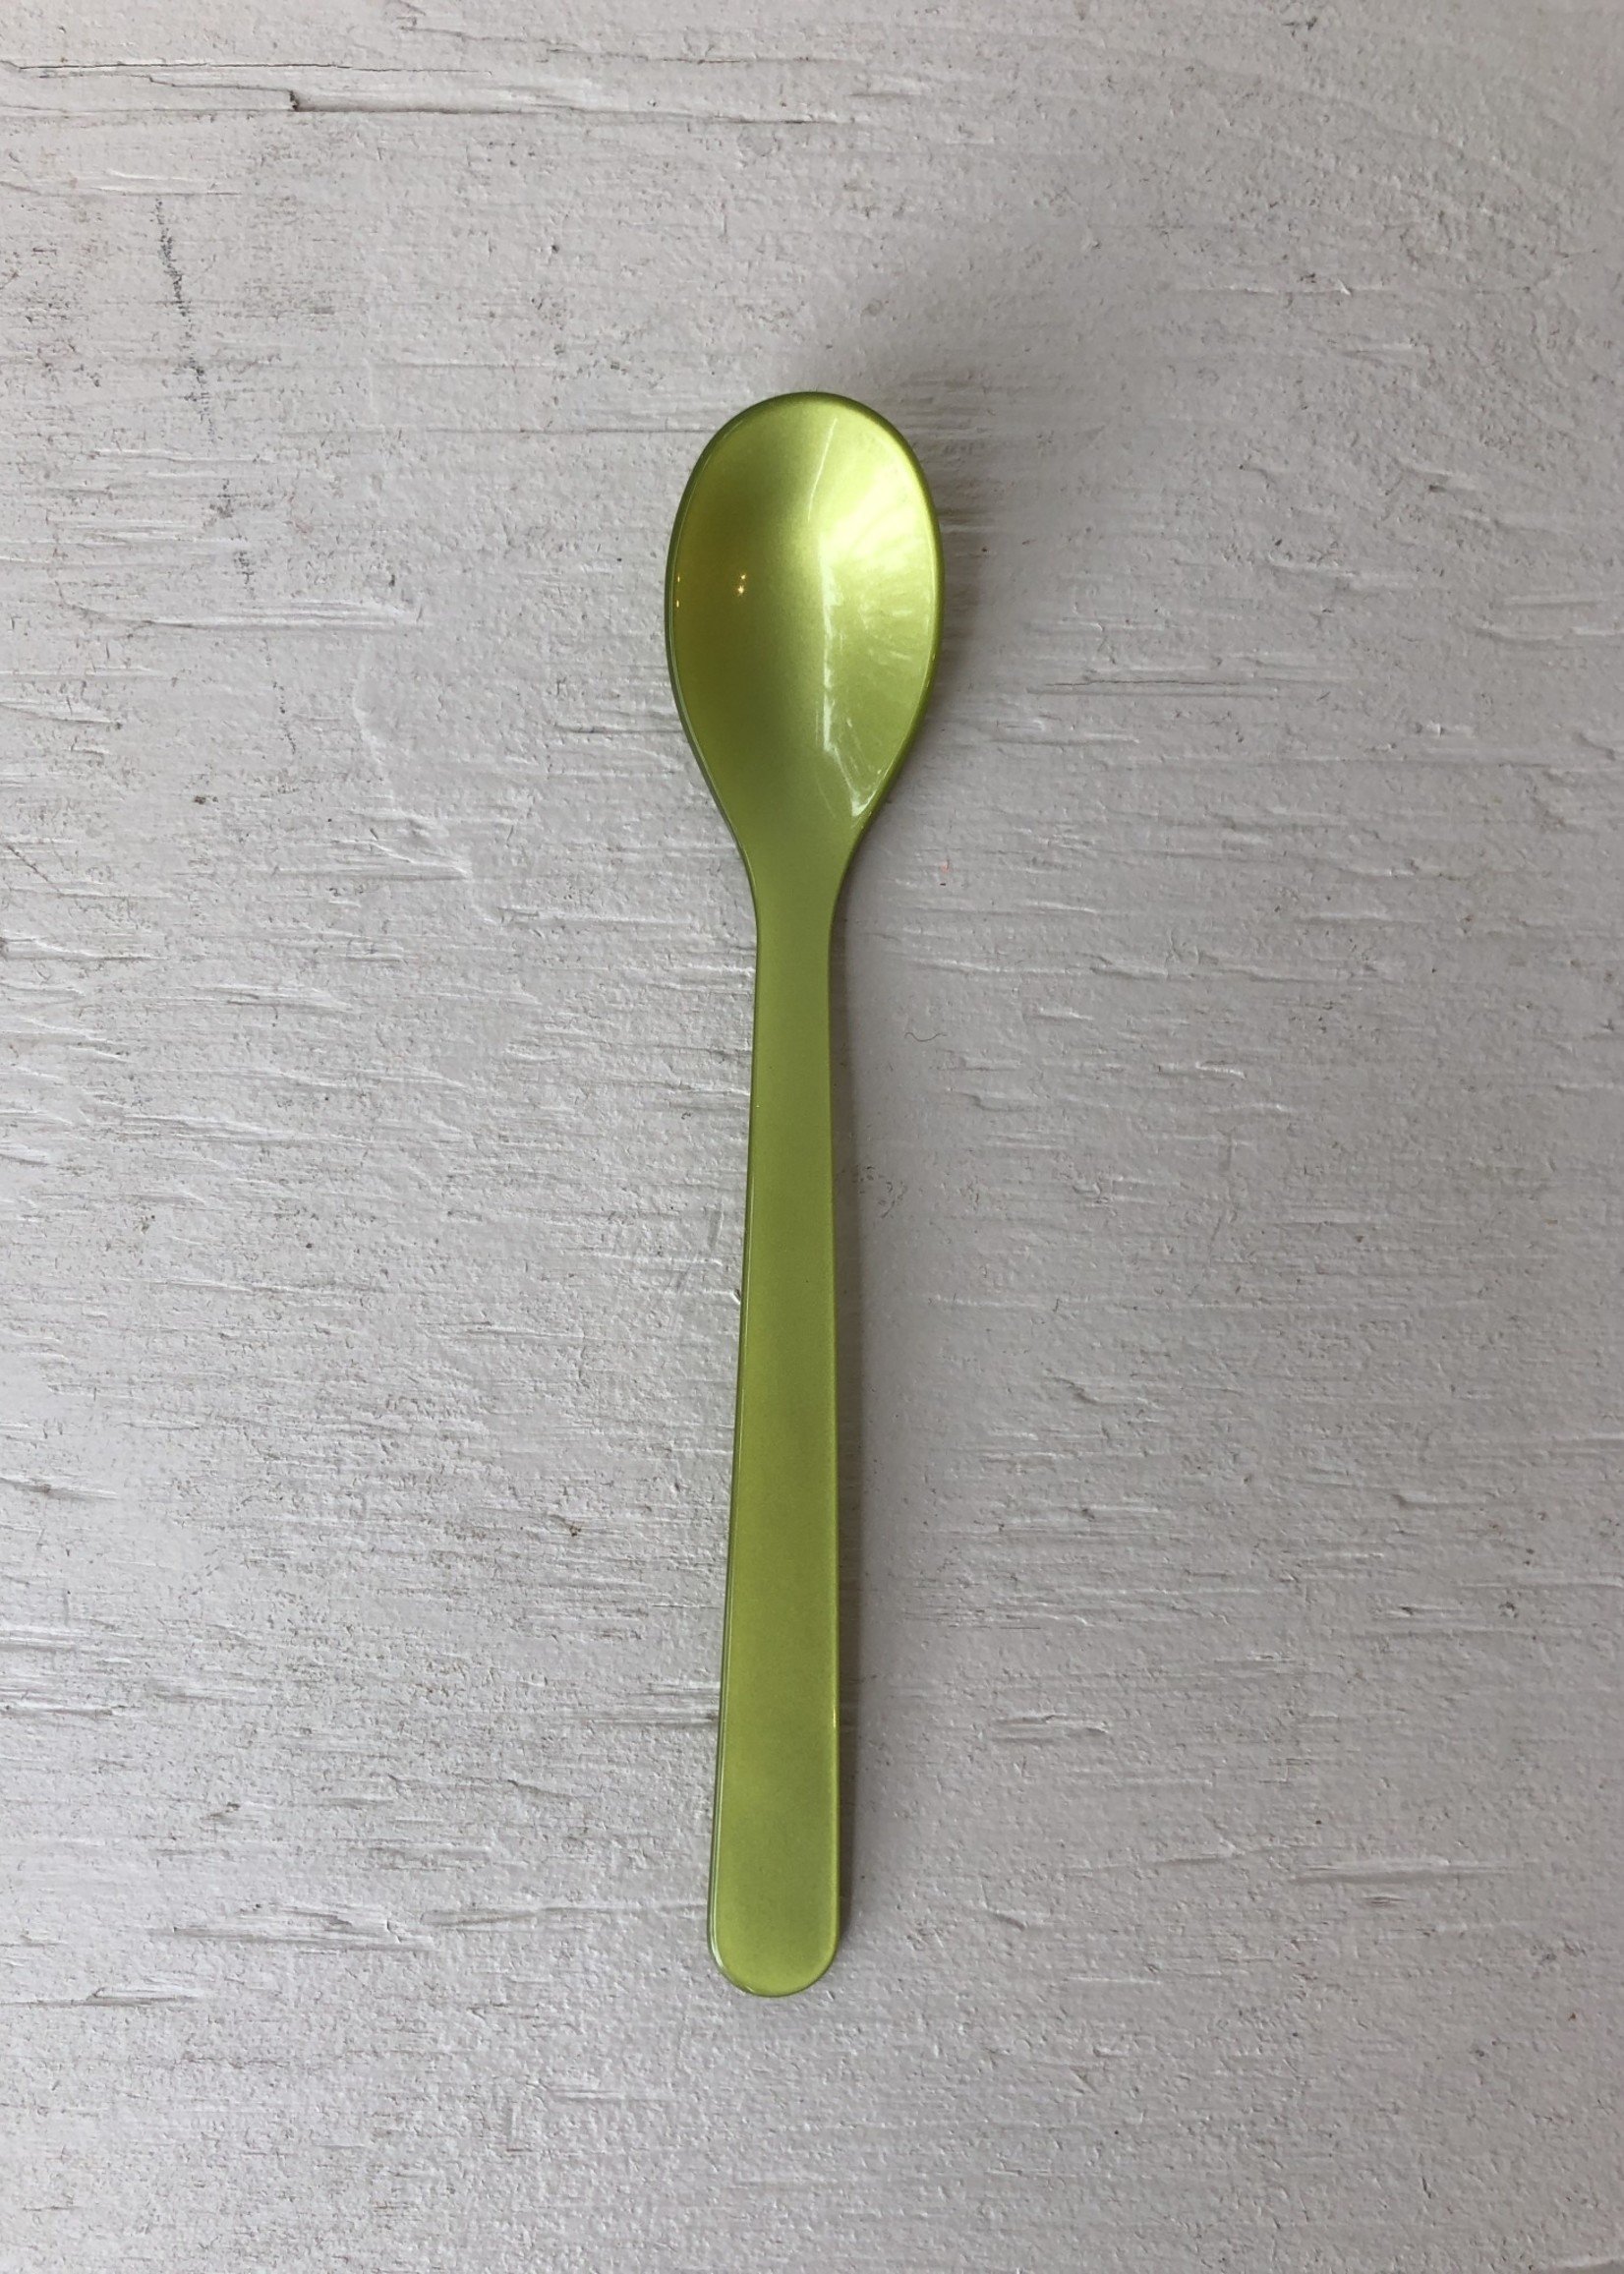 Heim Sohne Table Spoons by Heim Söhne